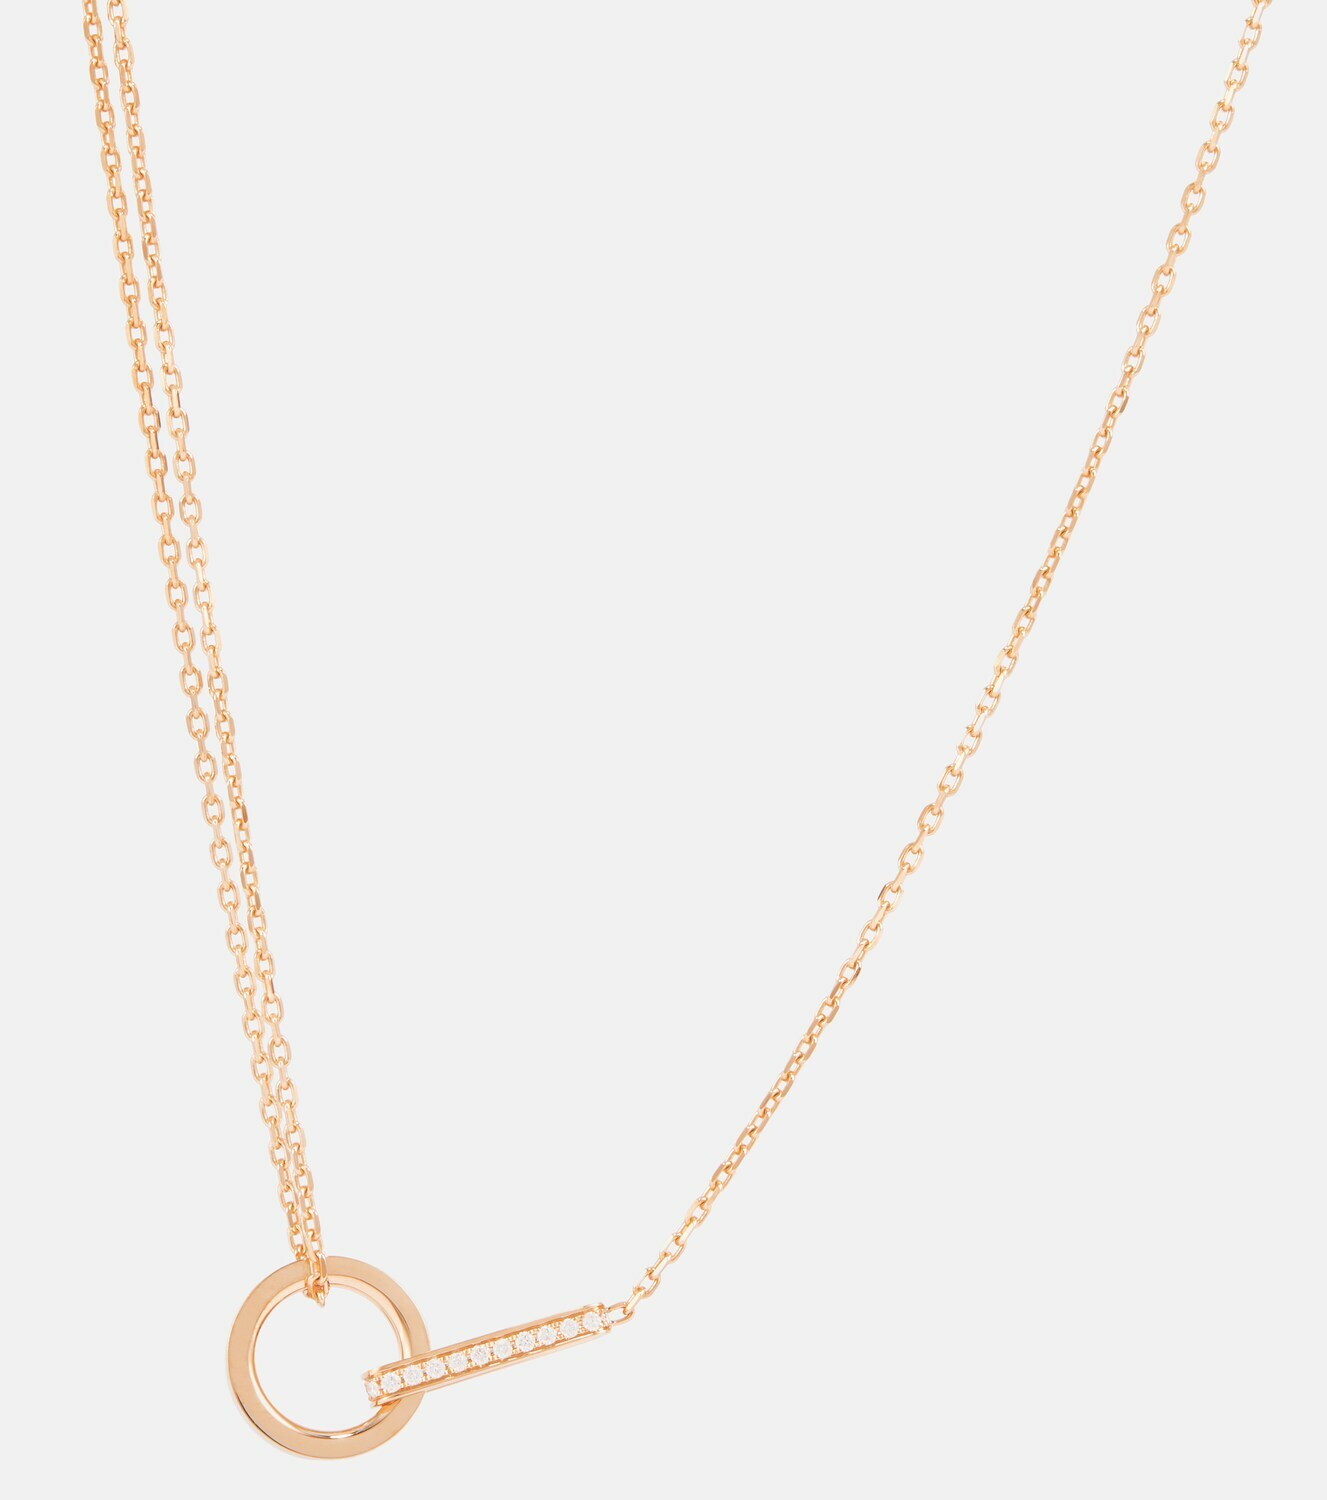 Repossi - Berbere 18kt rose gold necklace with diamonds Repossi